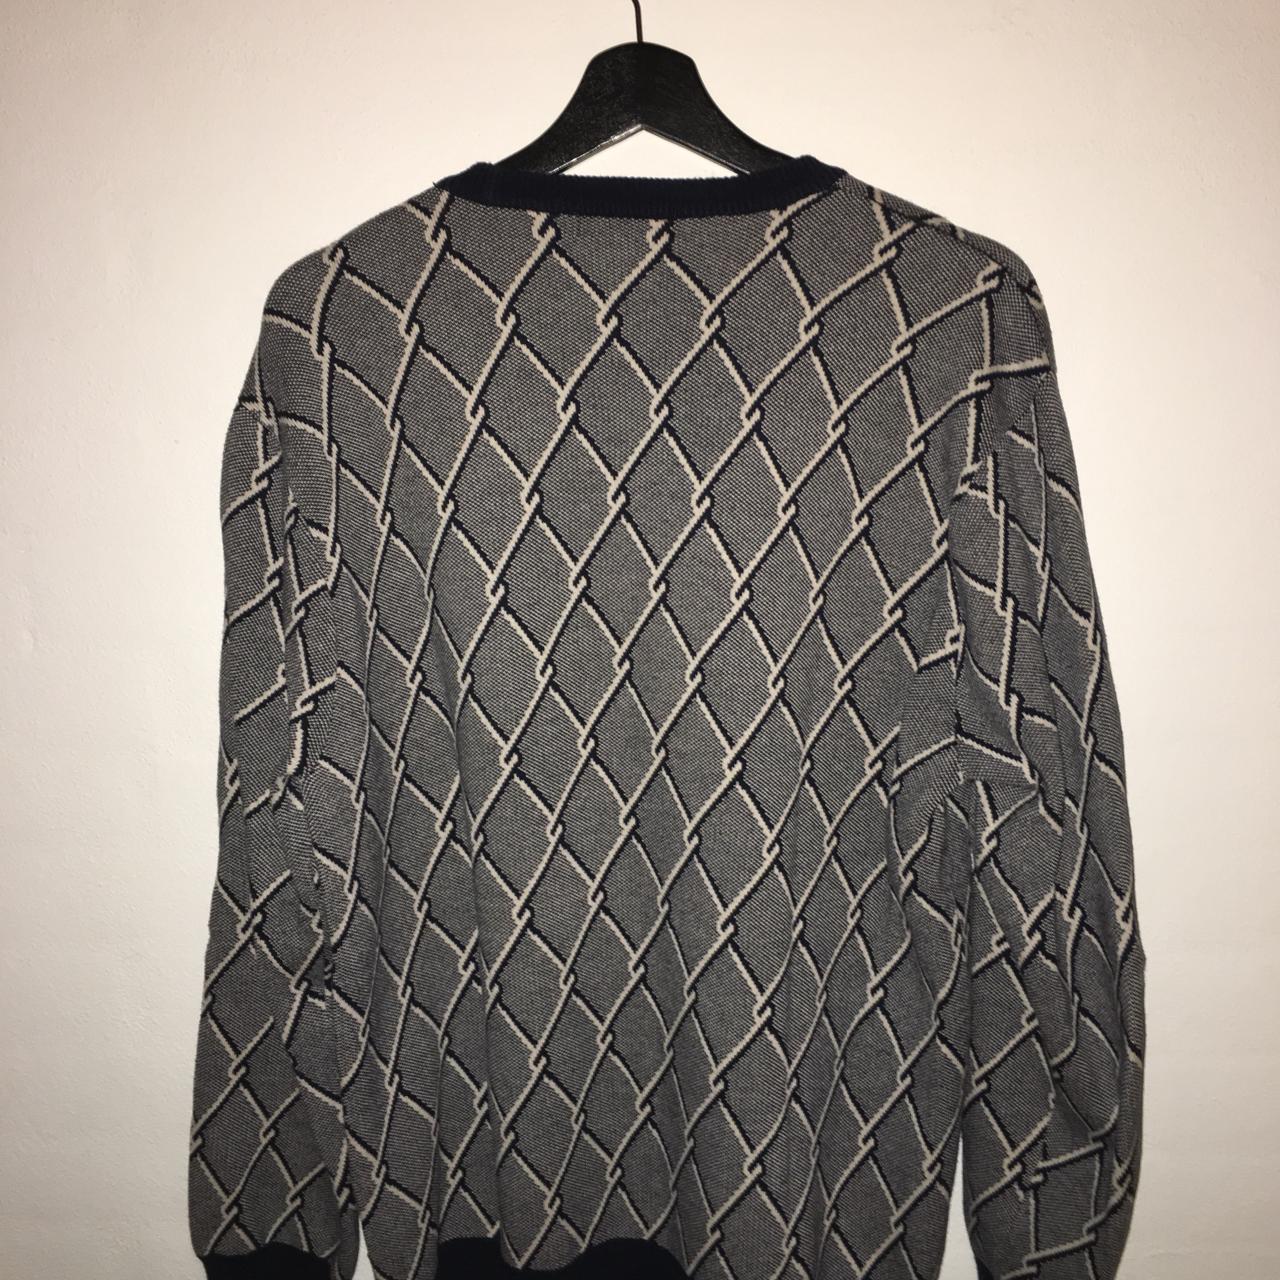 Supreme chainlink sweater. Supreme knit sweatshirt...